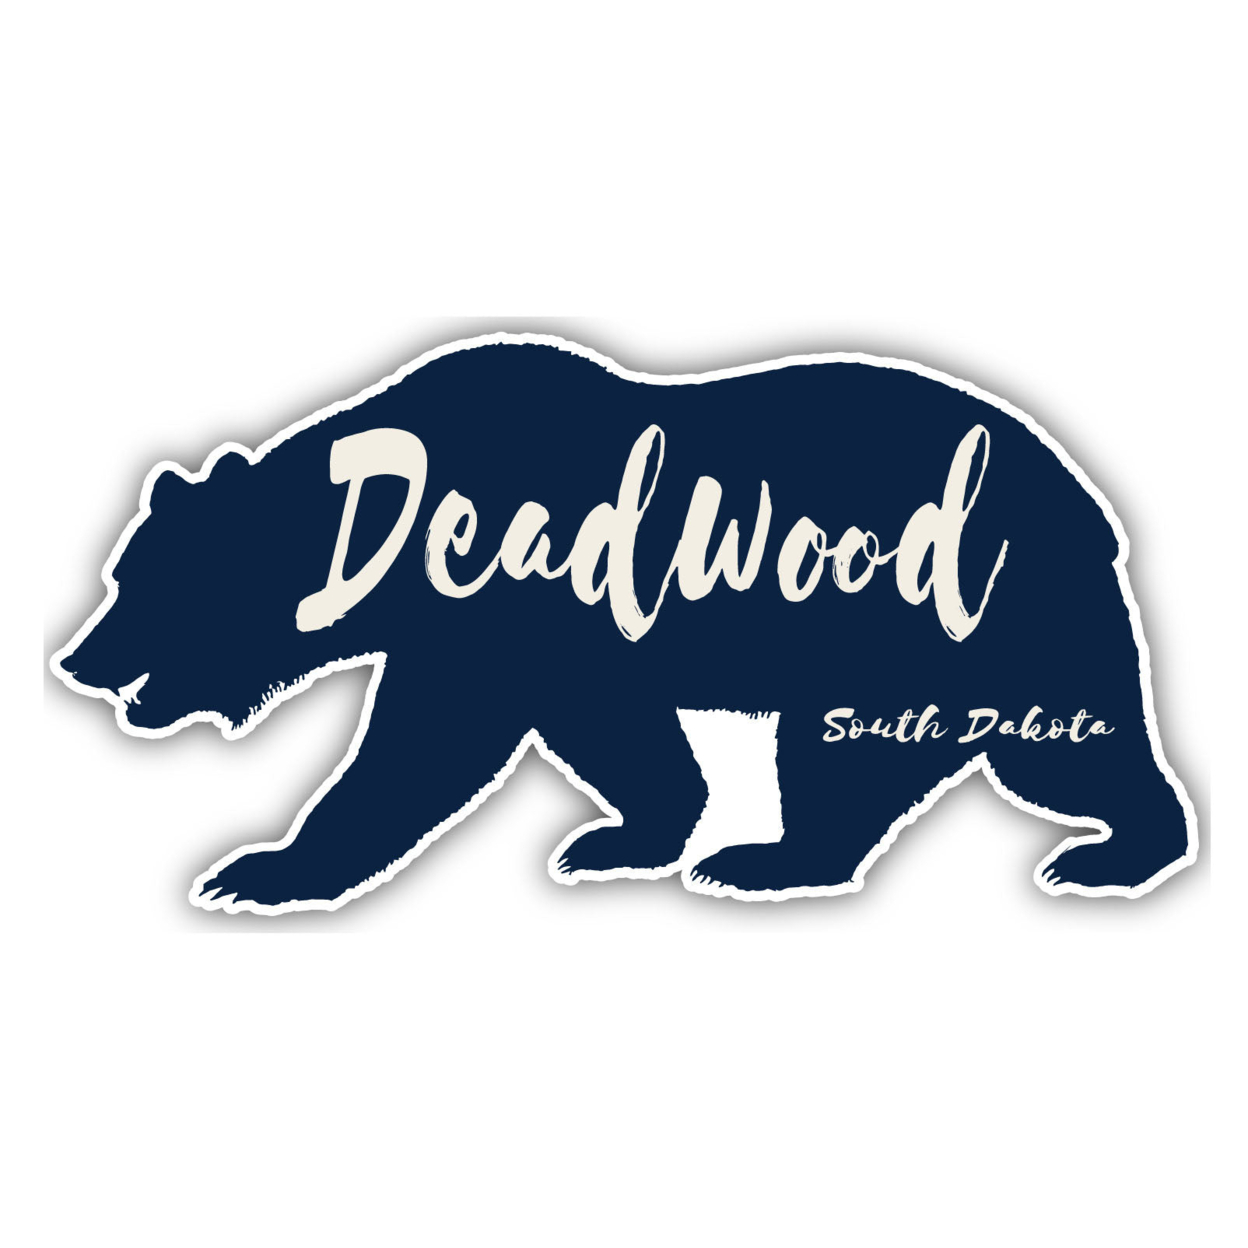 Deadwood South Dakota Souvenir Decorative Stickers (Choose Theme And Size) - 4-Pack, 2-Inch, Bear